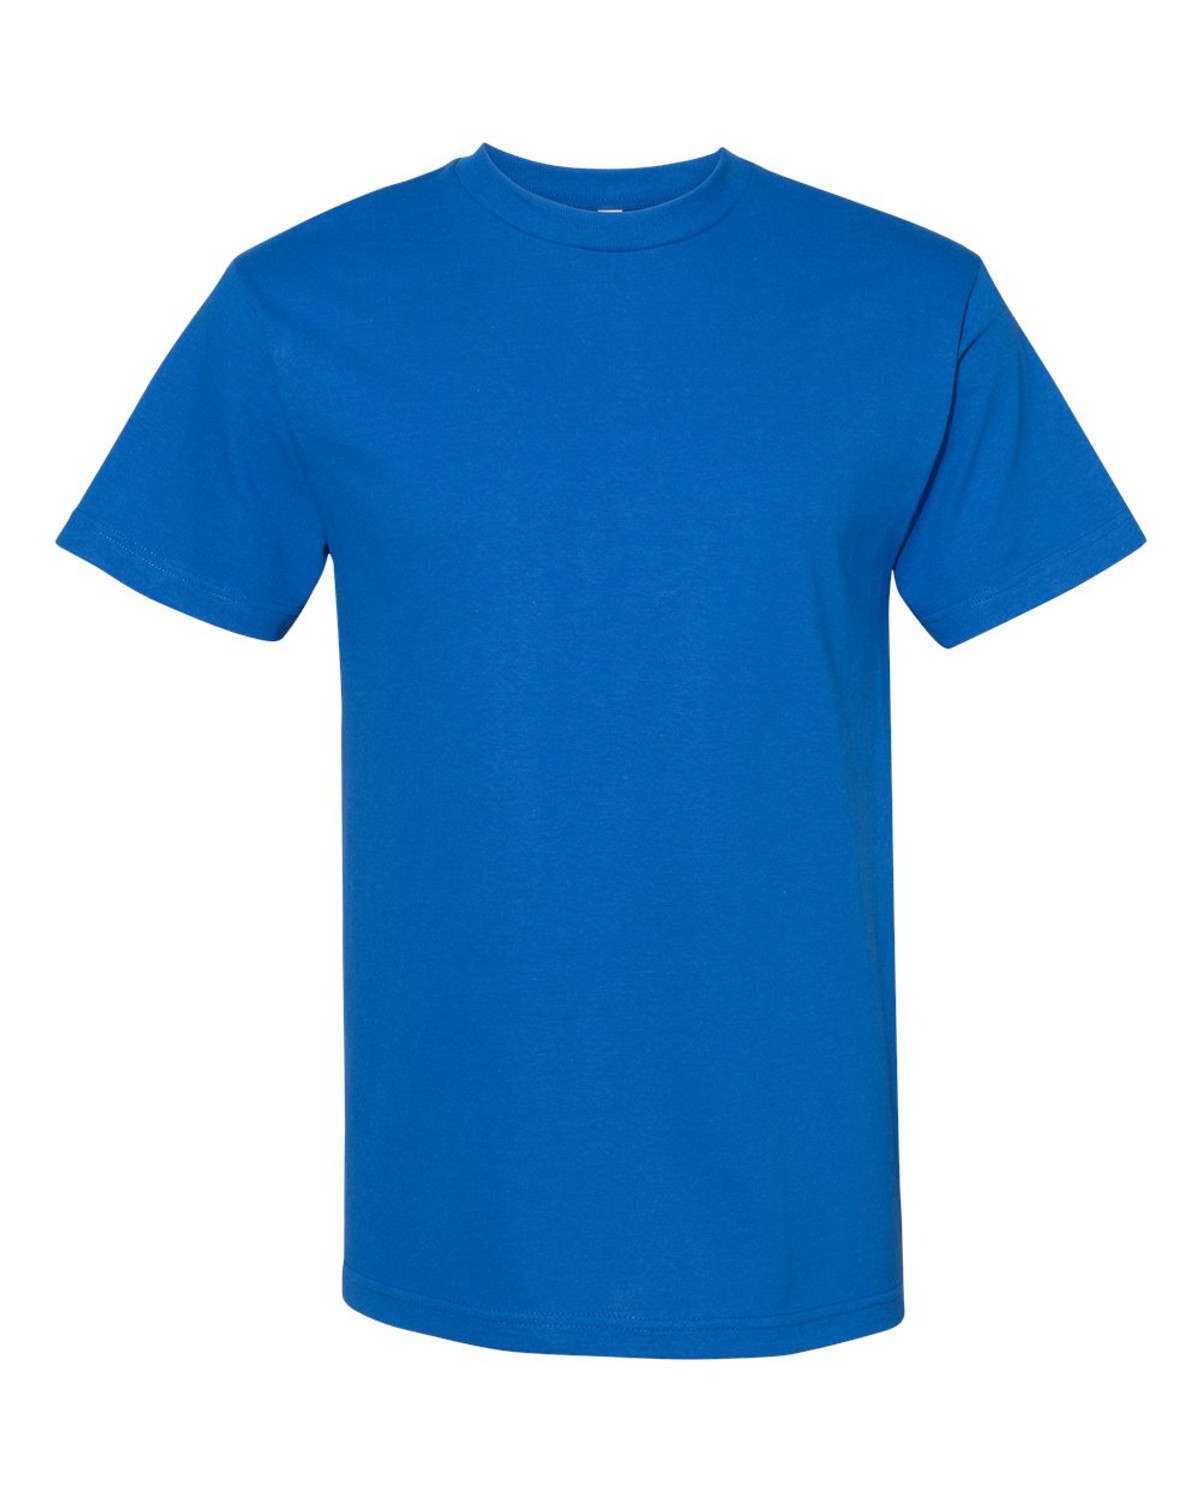 American Apparel 1301 Unisex Heavyweight Cotton T-Shirt 